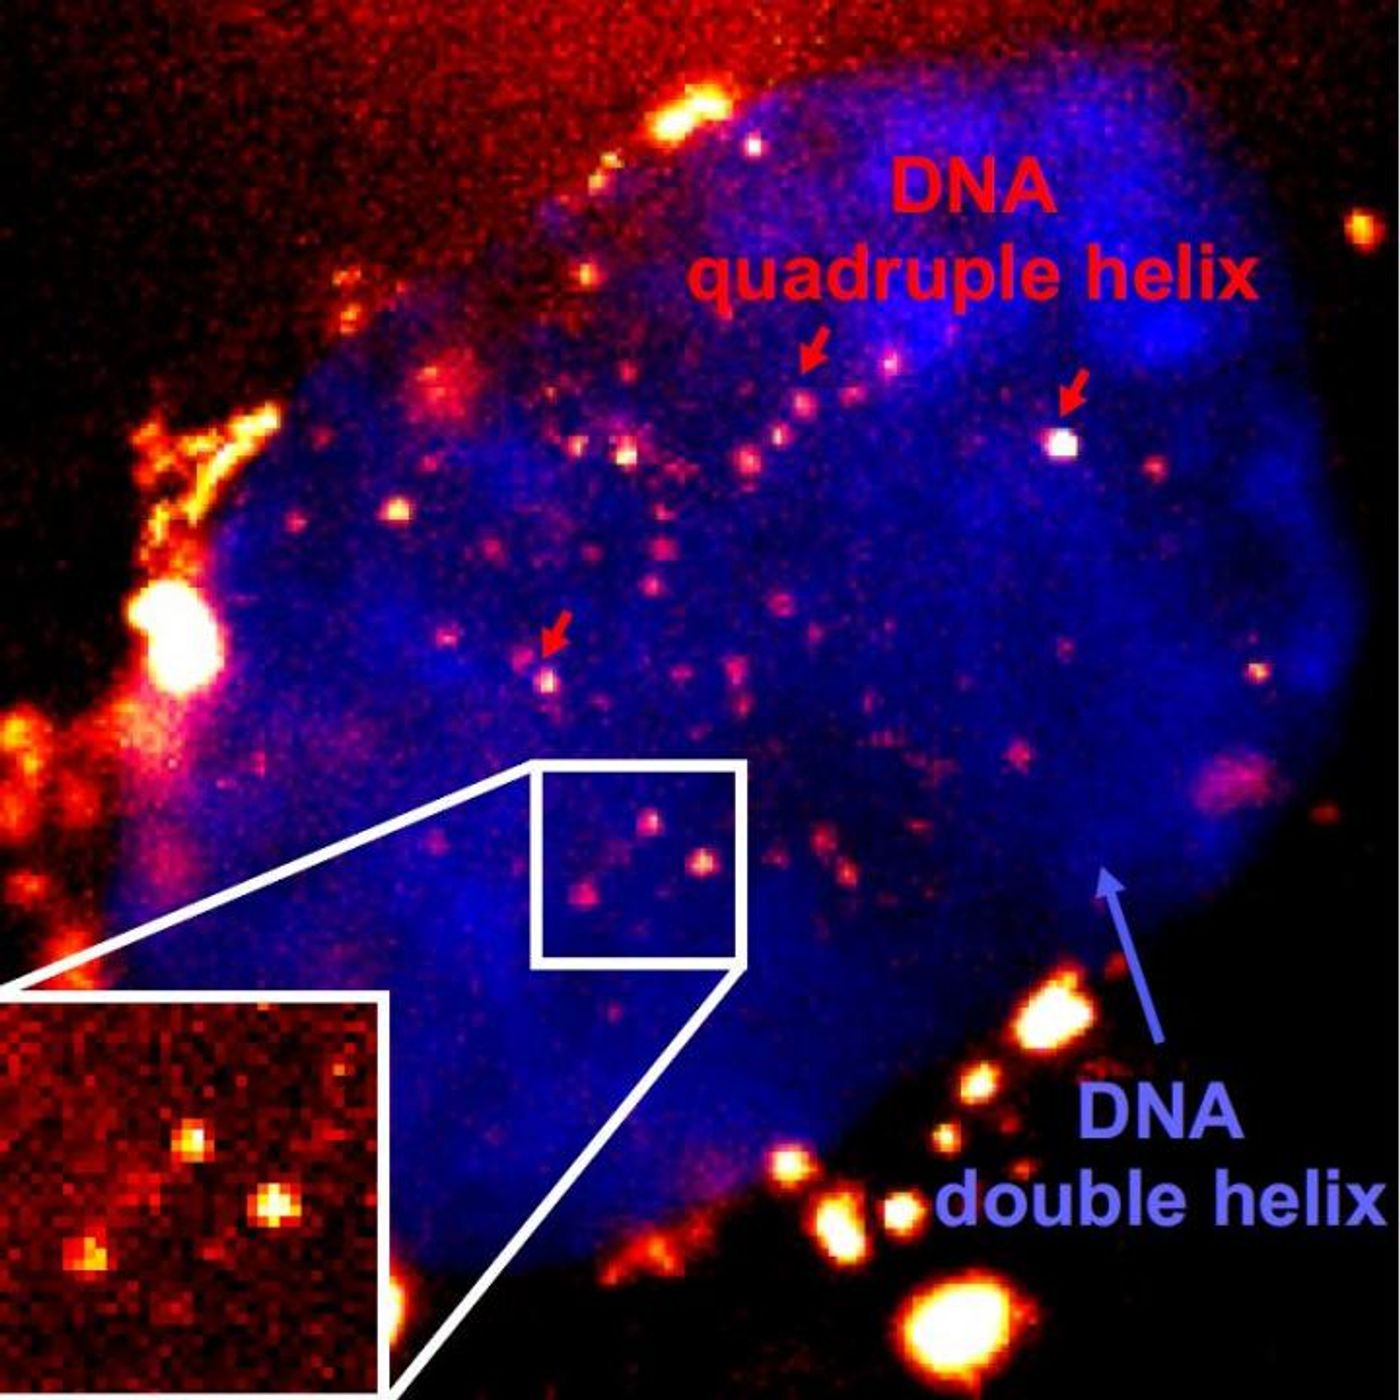 Microscopy image of fluorescent quadruple helix DNA / Credit: Di Antonio et al